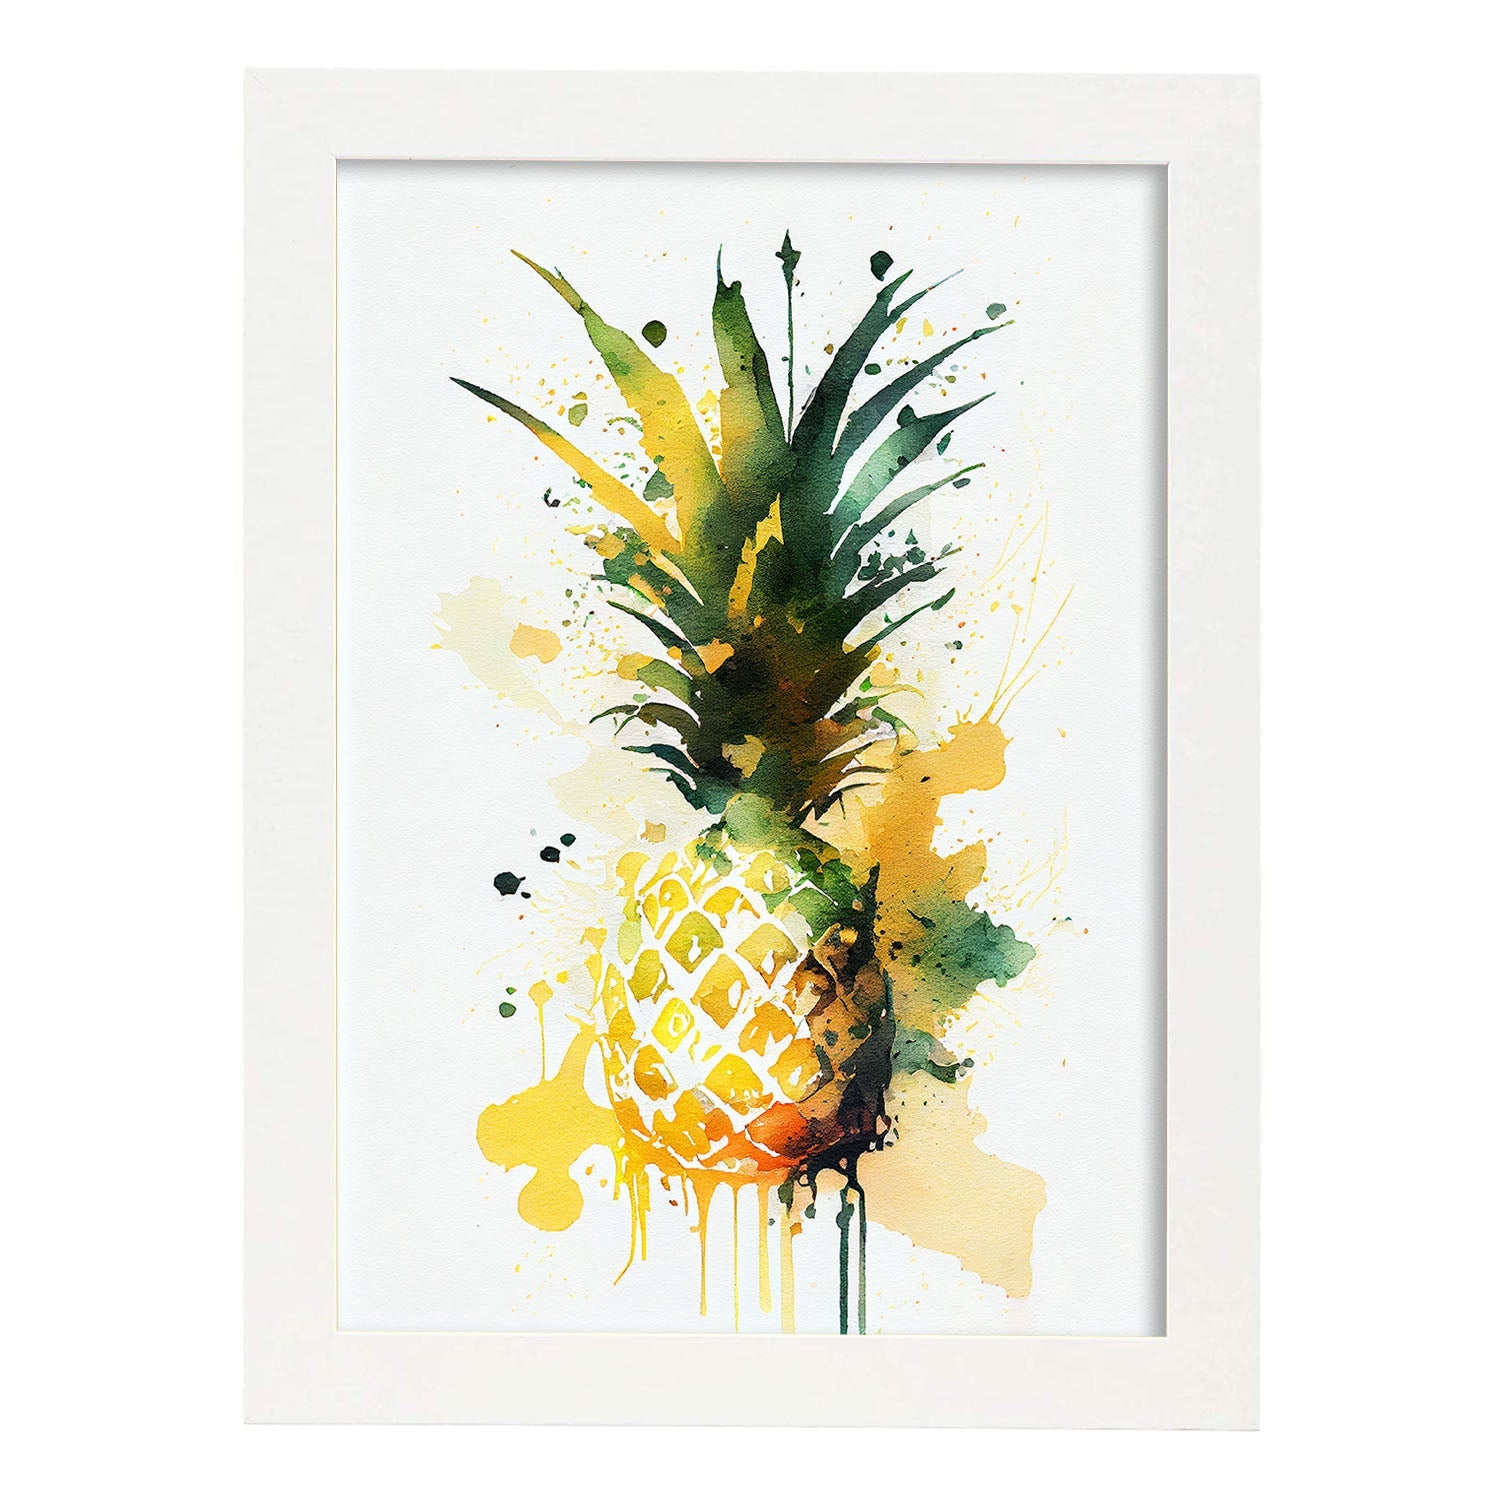 Nacnic minimalist Pineapple_7. Aesthetic Wall Art Prints for Bedroom or Living Room Design.-Artwork-Nacnic-A4-Marco Blanco-Nacnic Estudio SL